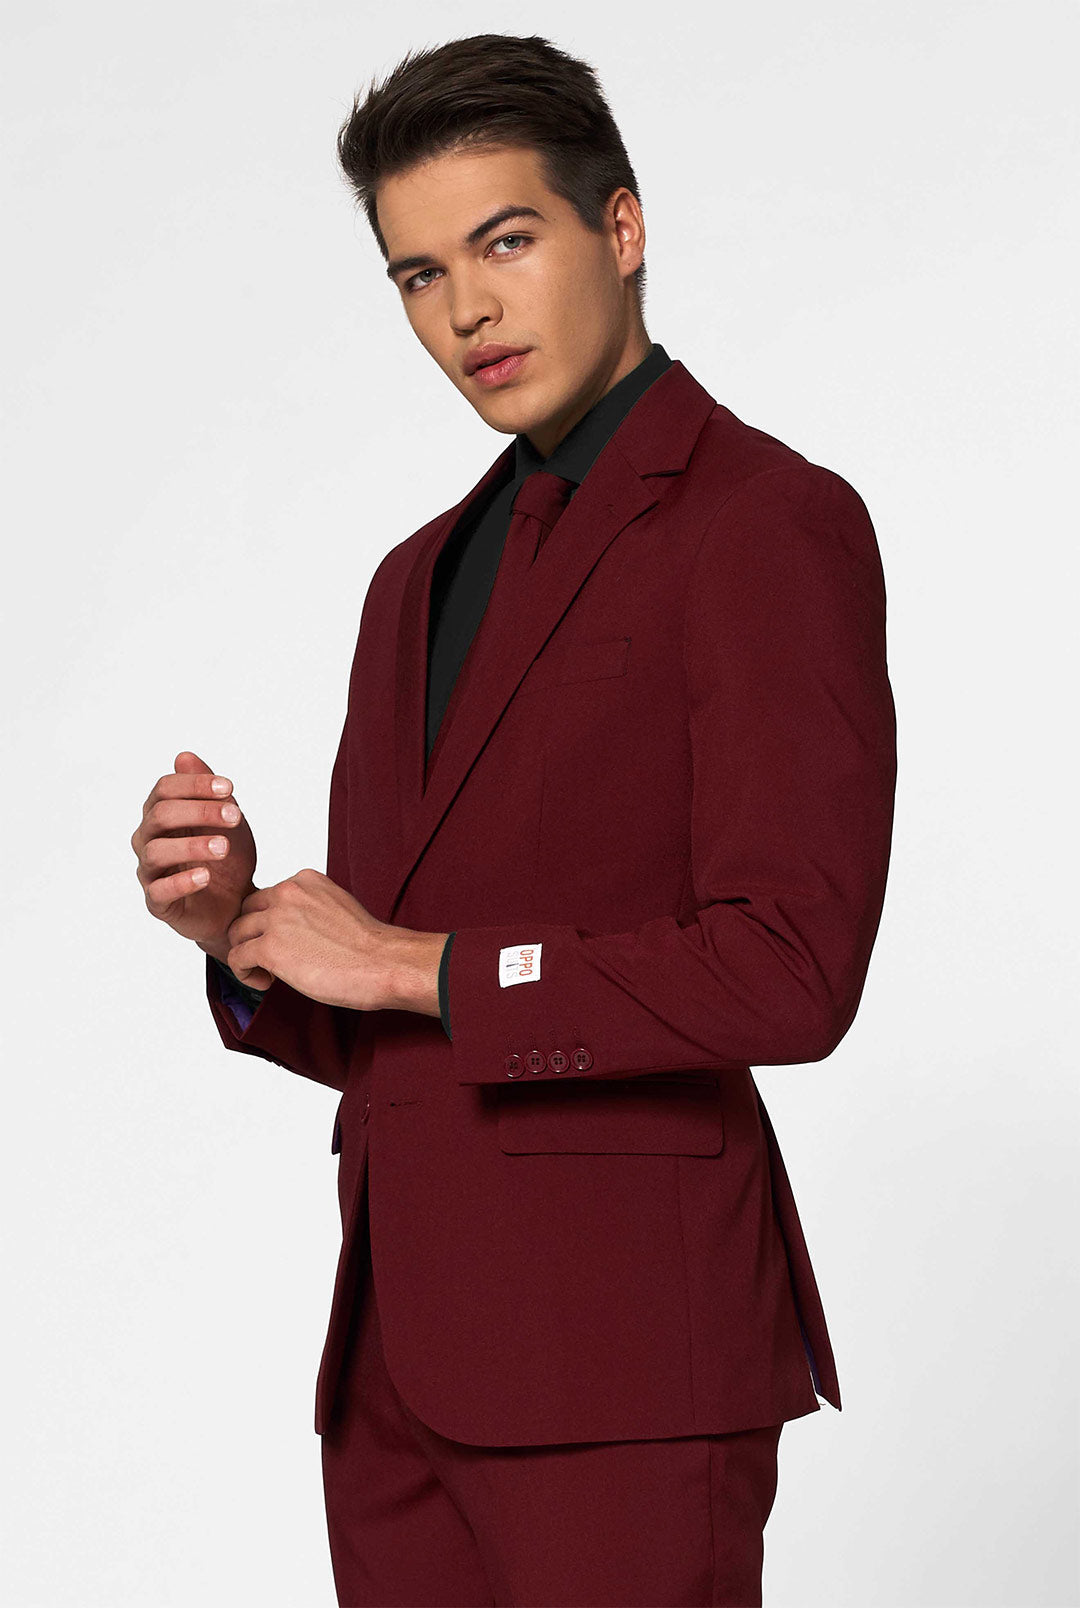 Men Suit Burgundy Formal Suit Slim Fit Wedding Evening Party Dinner Coat  Pants | eBay